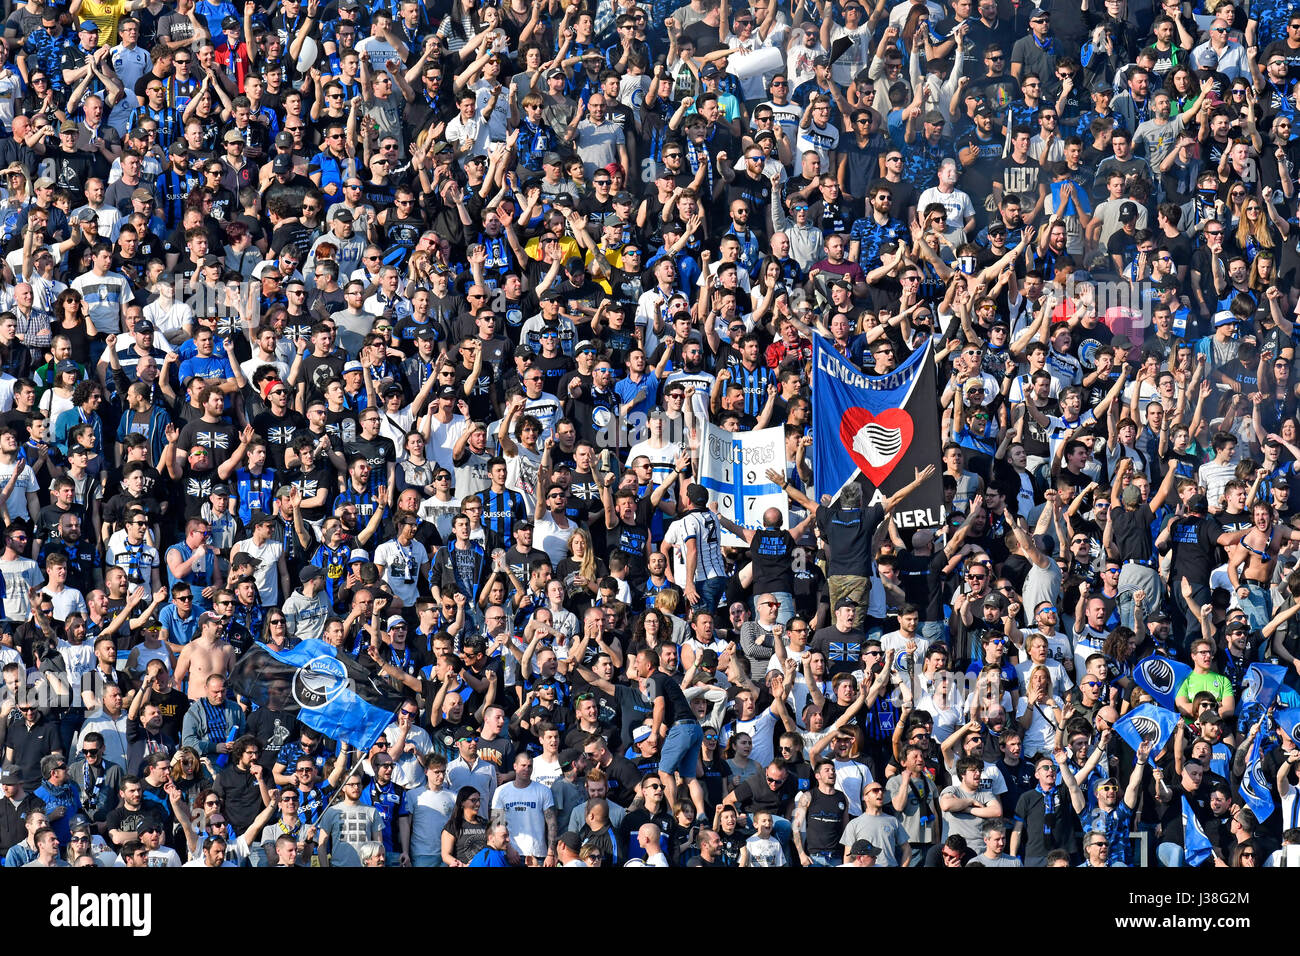 Atalanta's Fußballfans jubeln im Stadion in Bergamo, Italien. Stockfoto